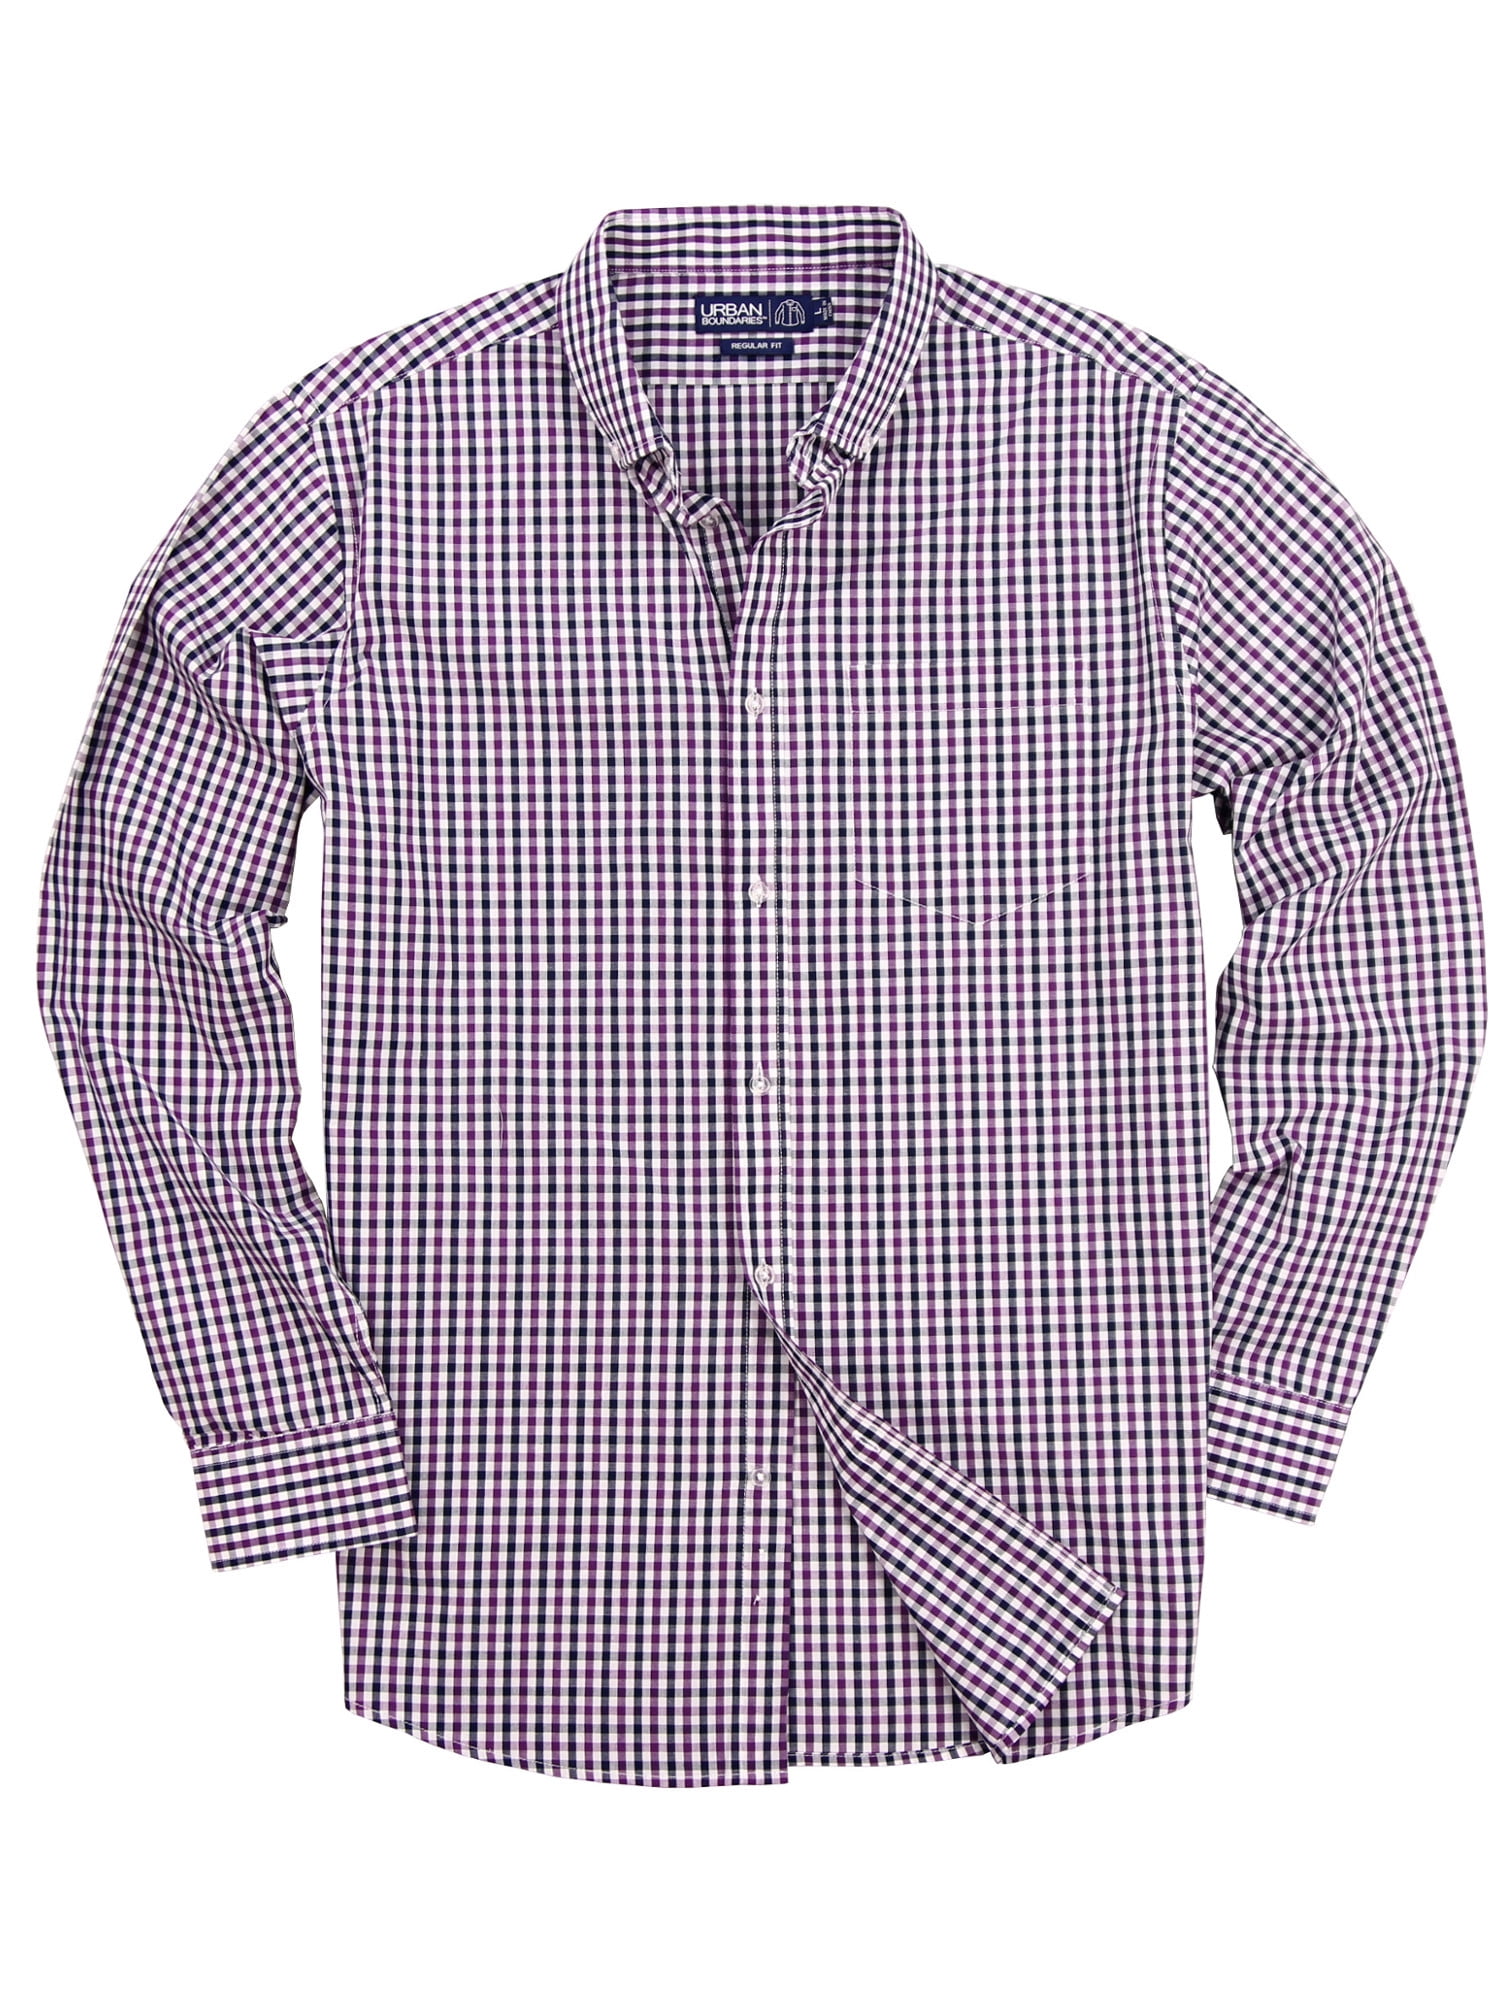 Urban Boundaries - Men's 100% Cotton Plaid Long Sleeve Shirt (Pink ...